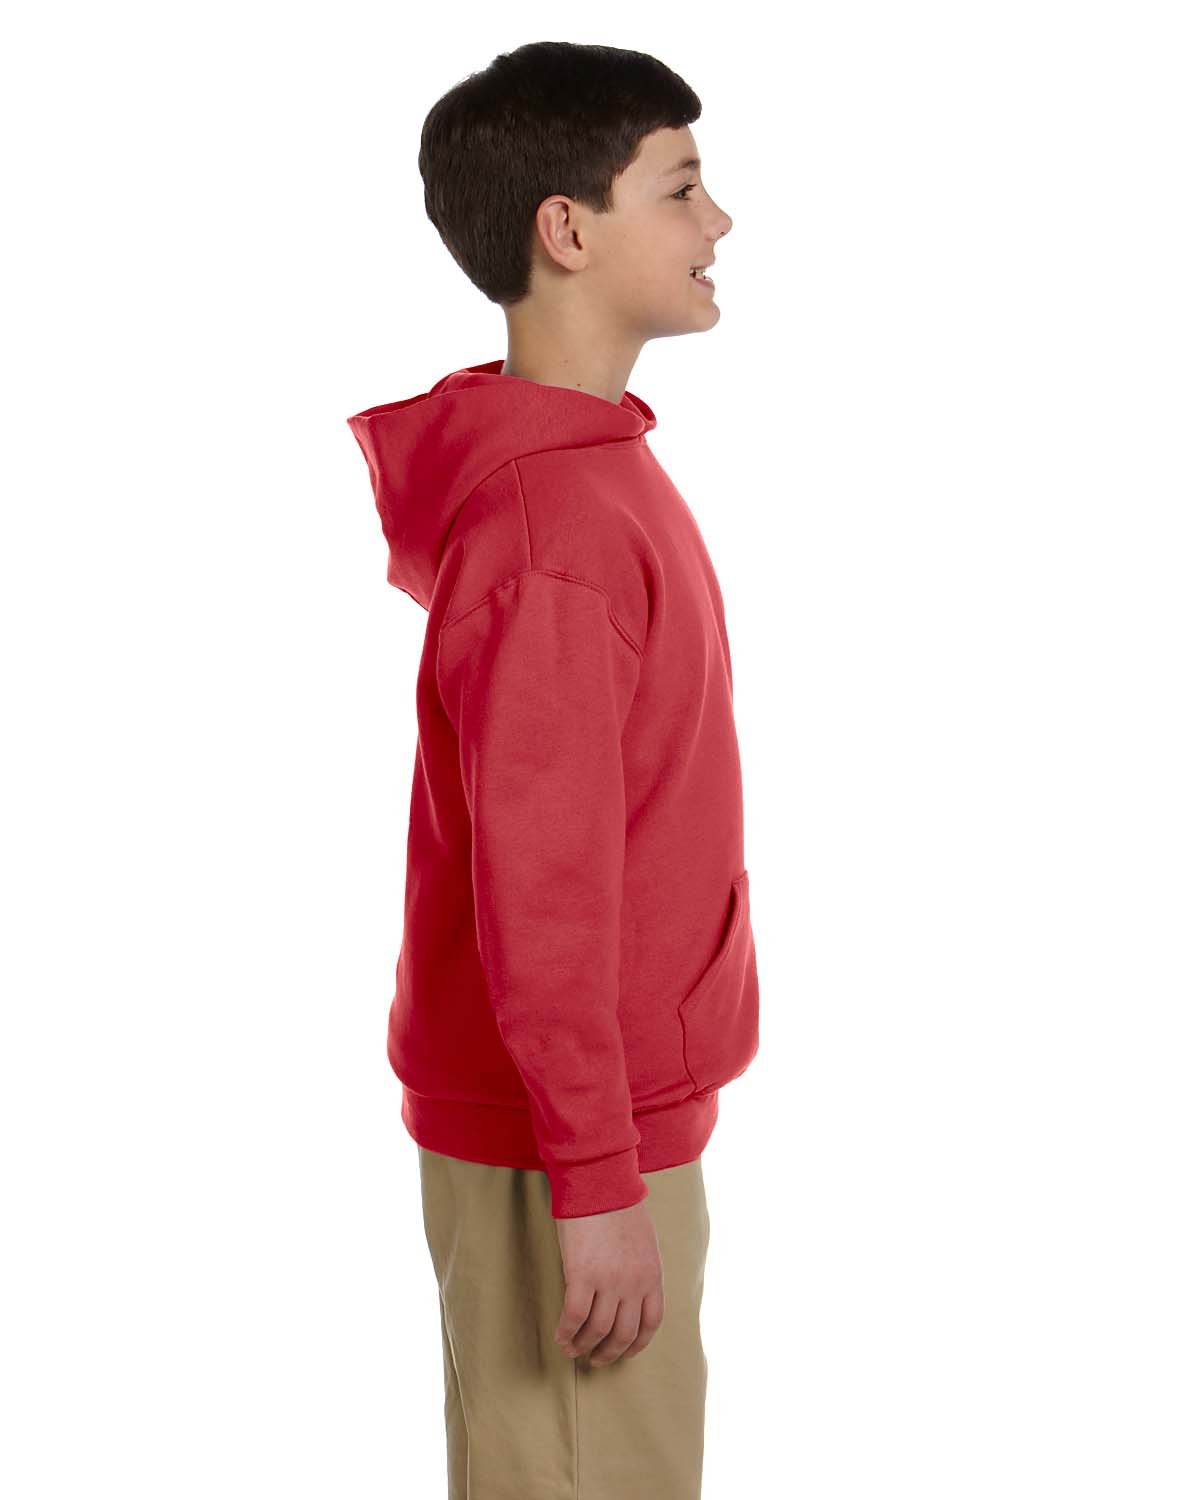 Jerzees Boys' Big Youth NuBlend Sweatshirts & Hoodies, Cotton Blend, Size S-XL